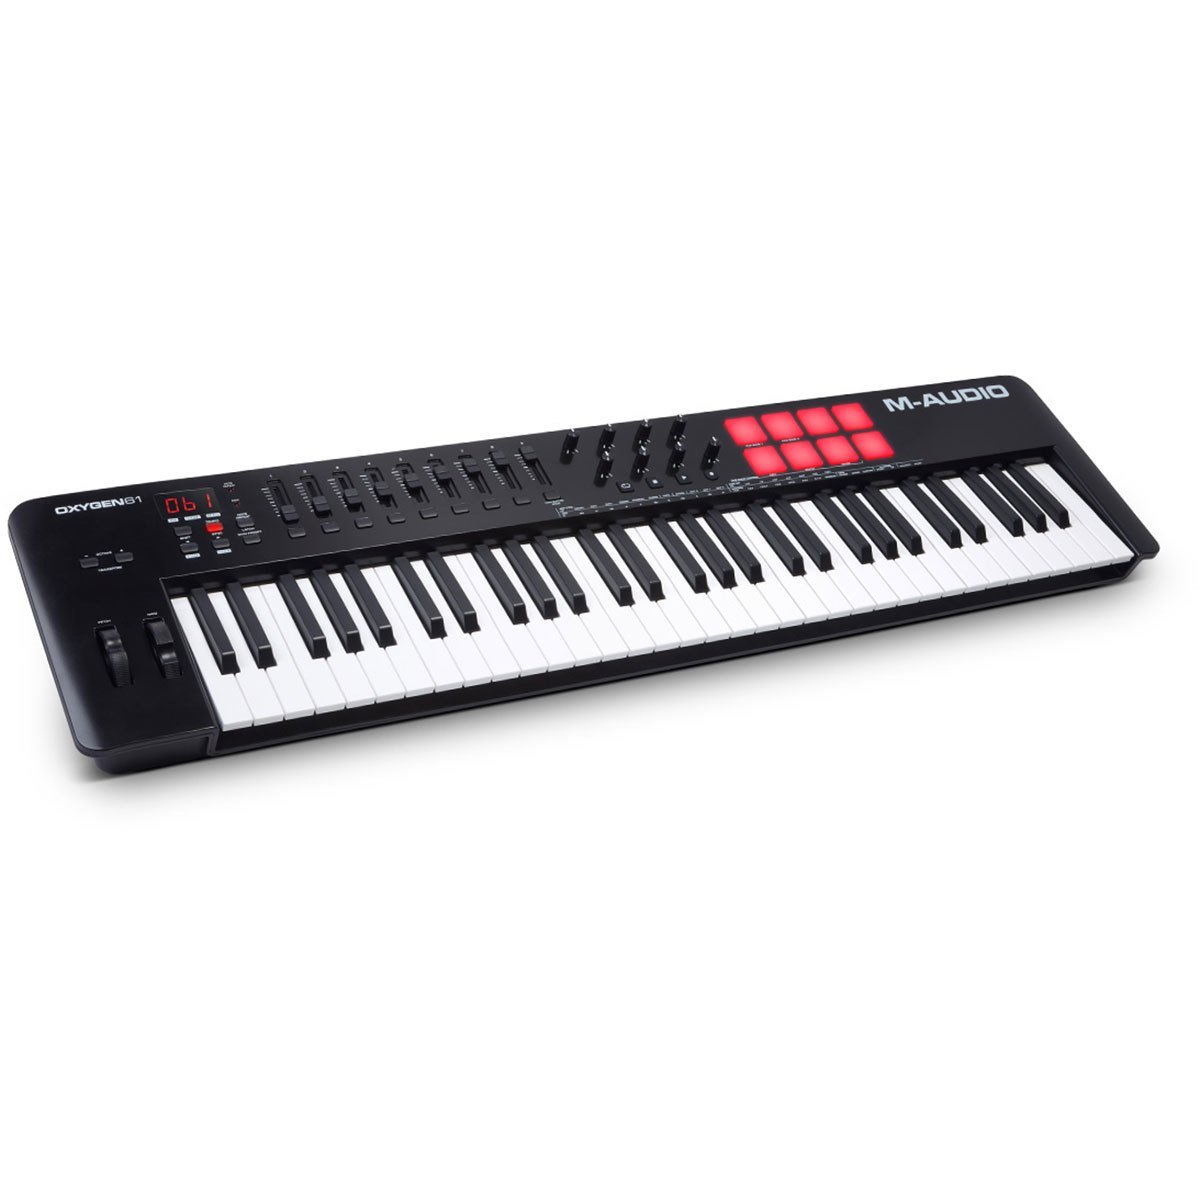 M-Audio Oxygen 61 MKV MIDI Klavye